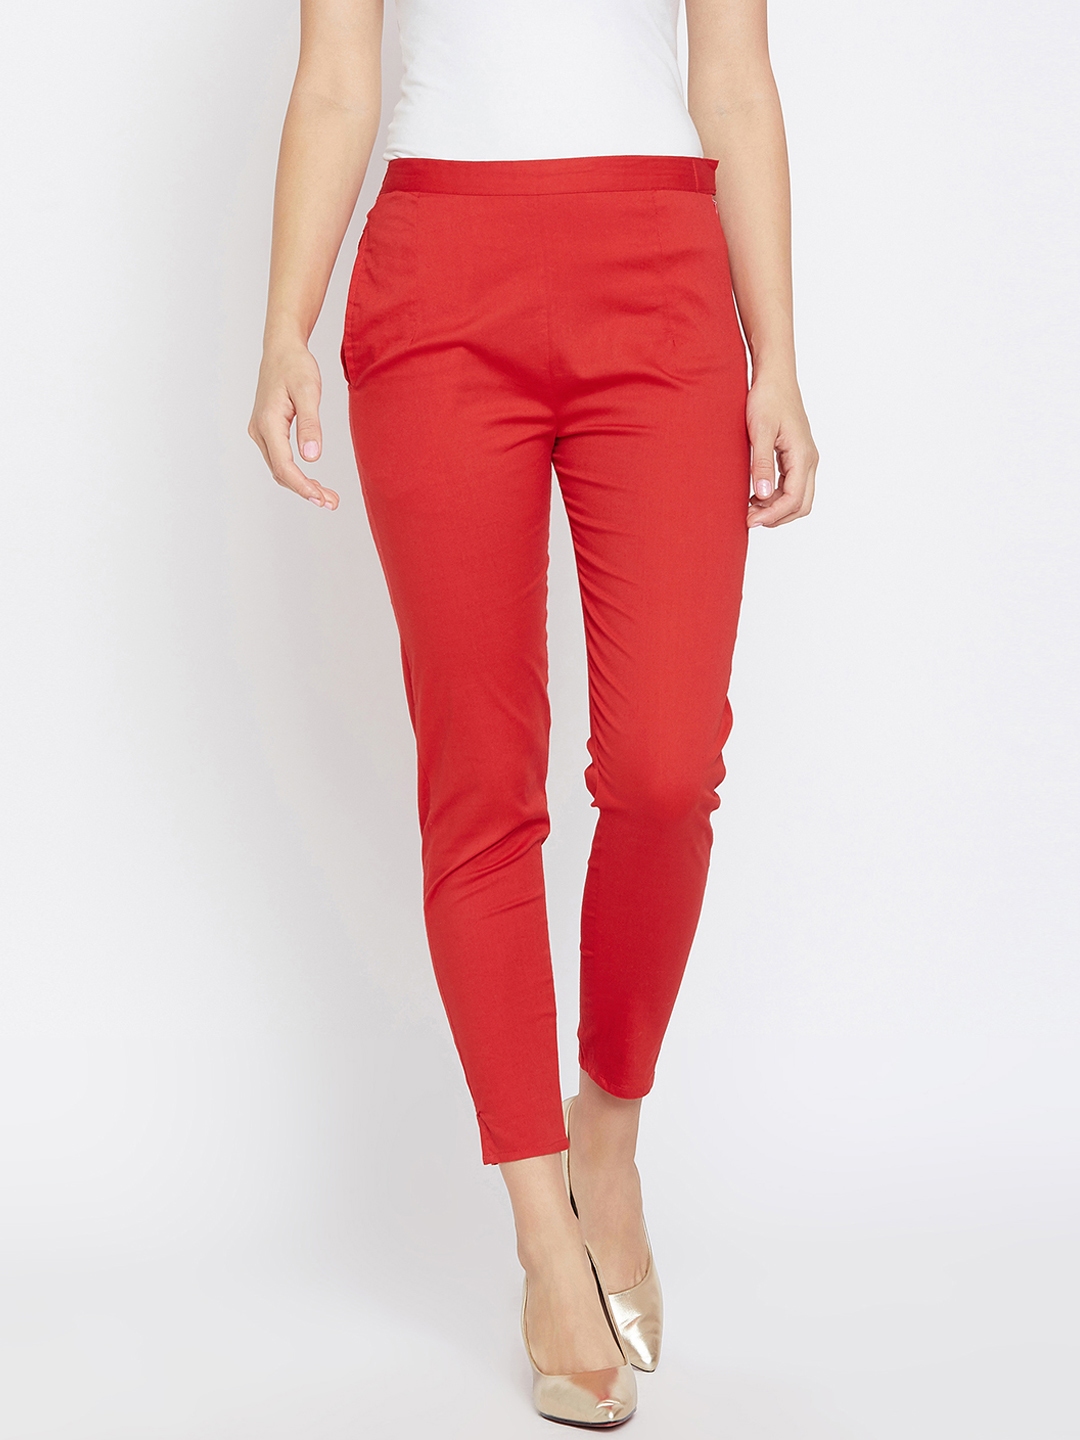 Pencil Pants Poppy Red  Unimod Chic Fashion